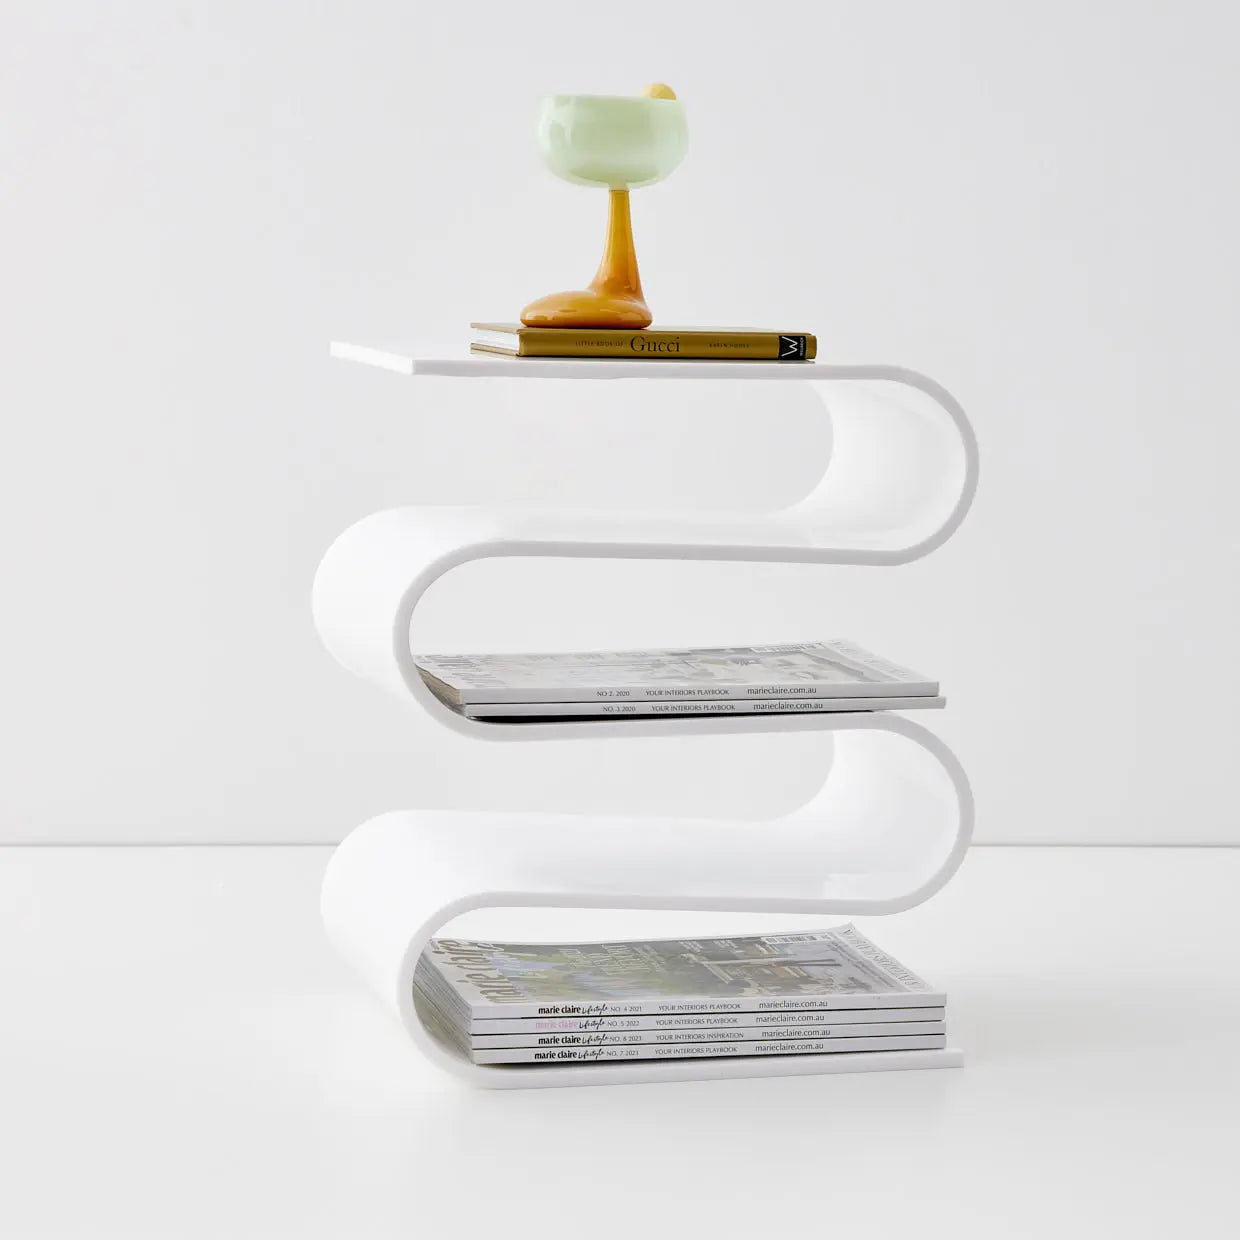 S Bend Acrylic Side Table White - GigiandTom